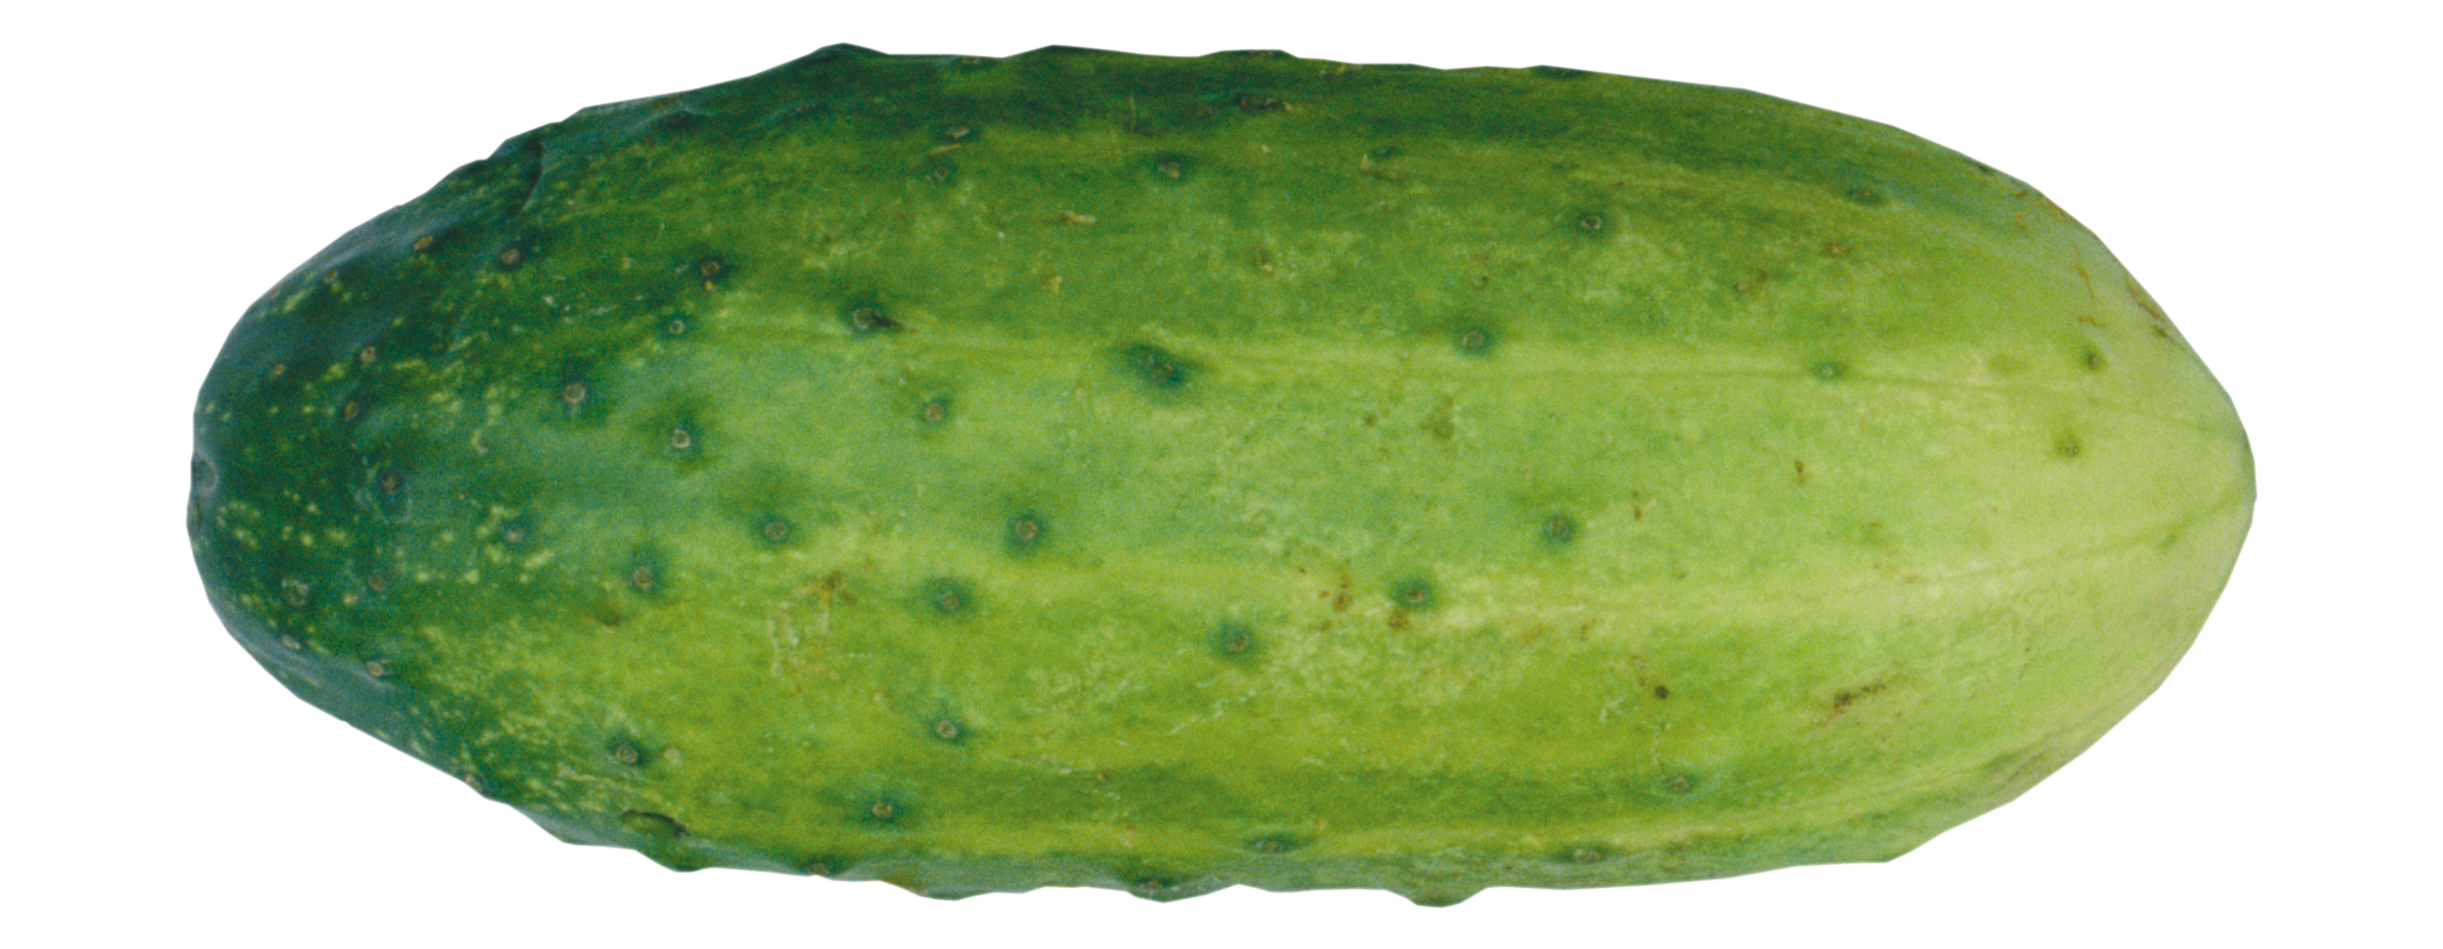 Cucumber clipart kiaavto